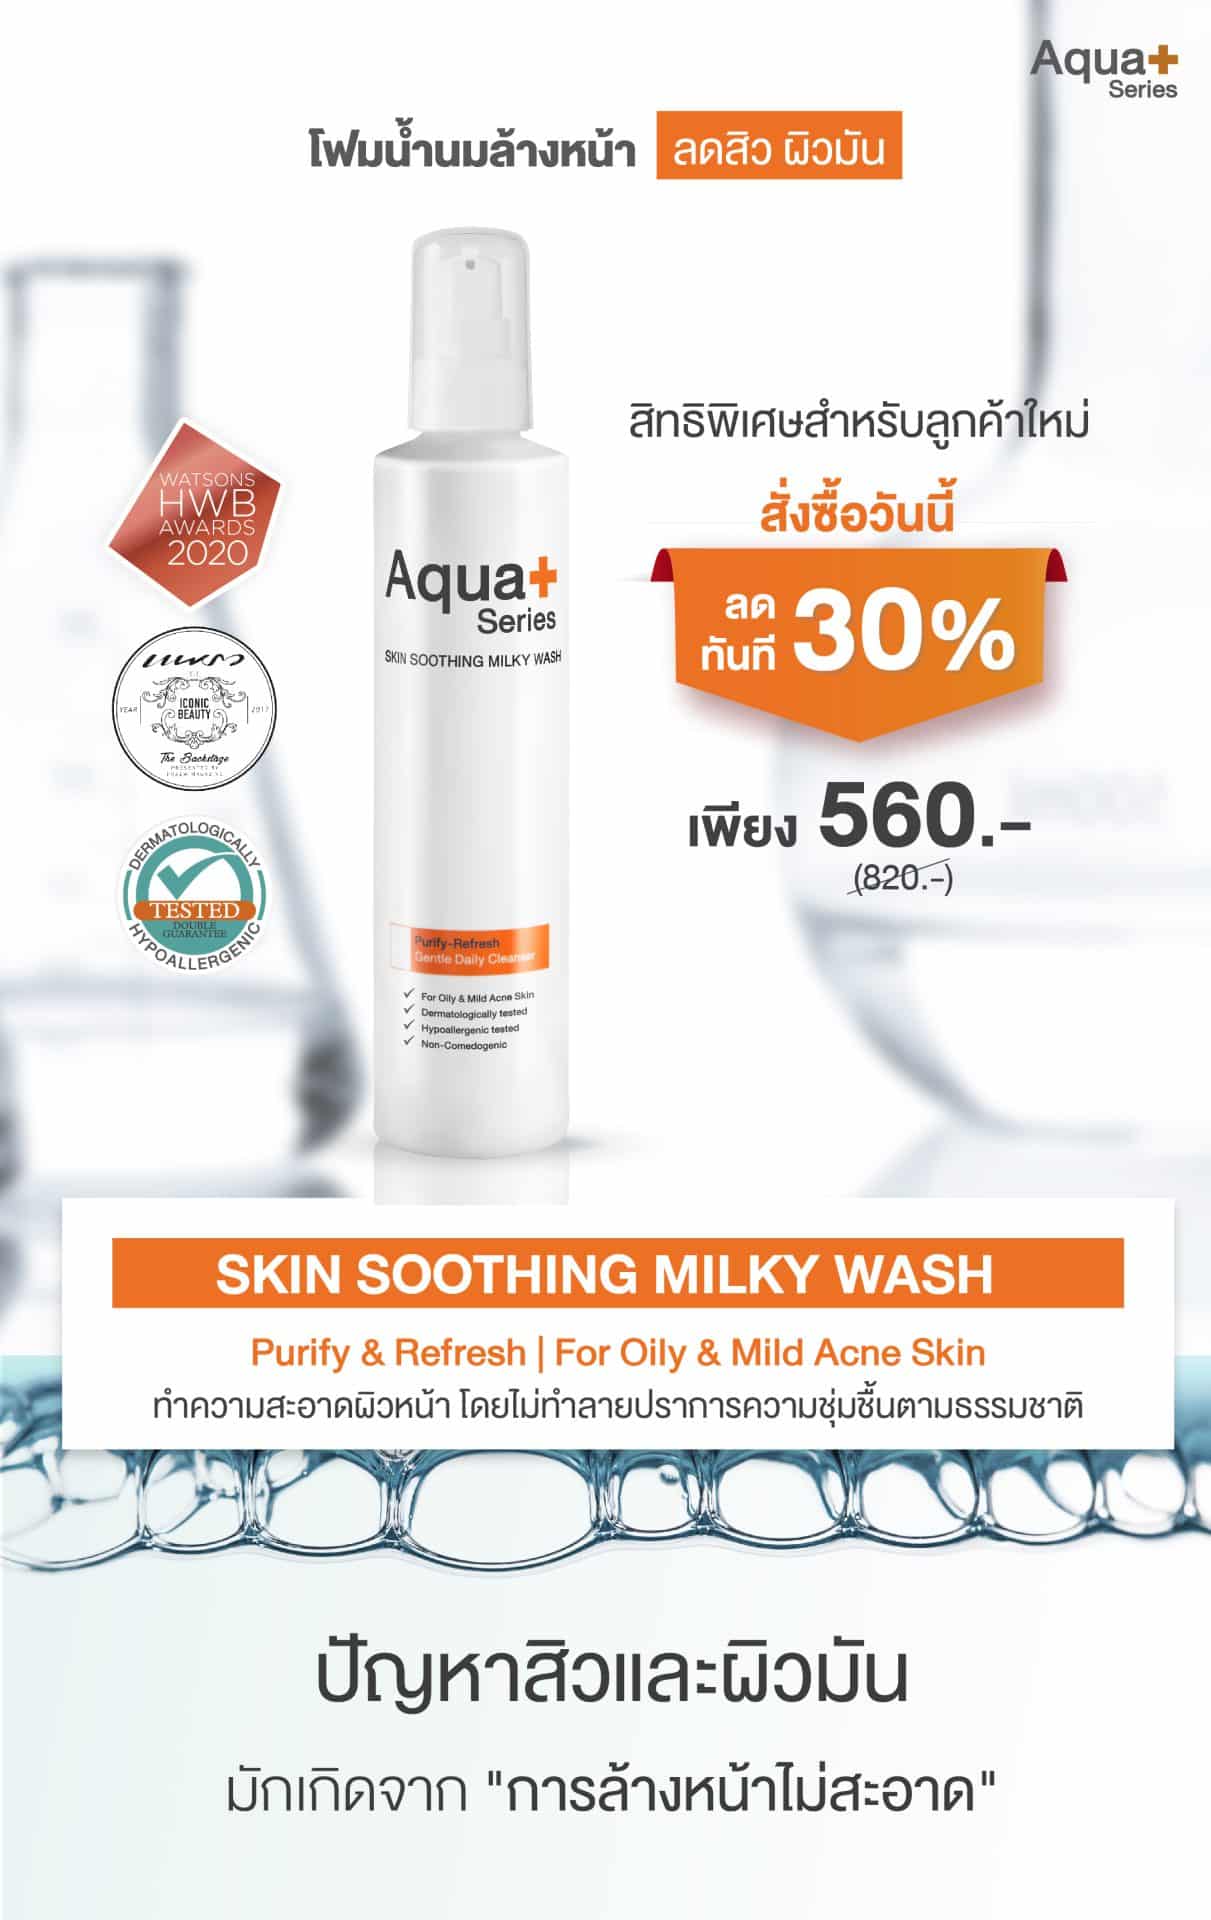 AquaPlus Skin Soothing Milky Wash